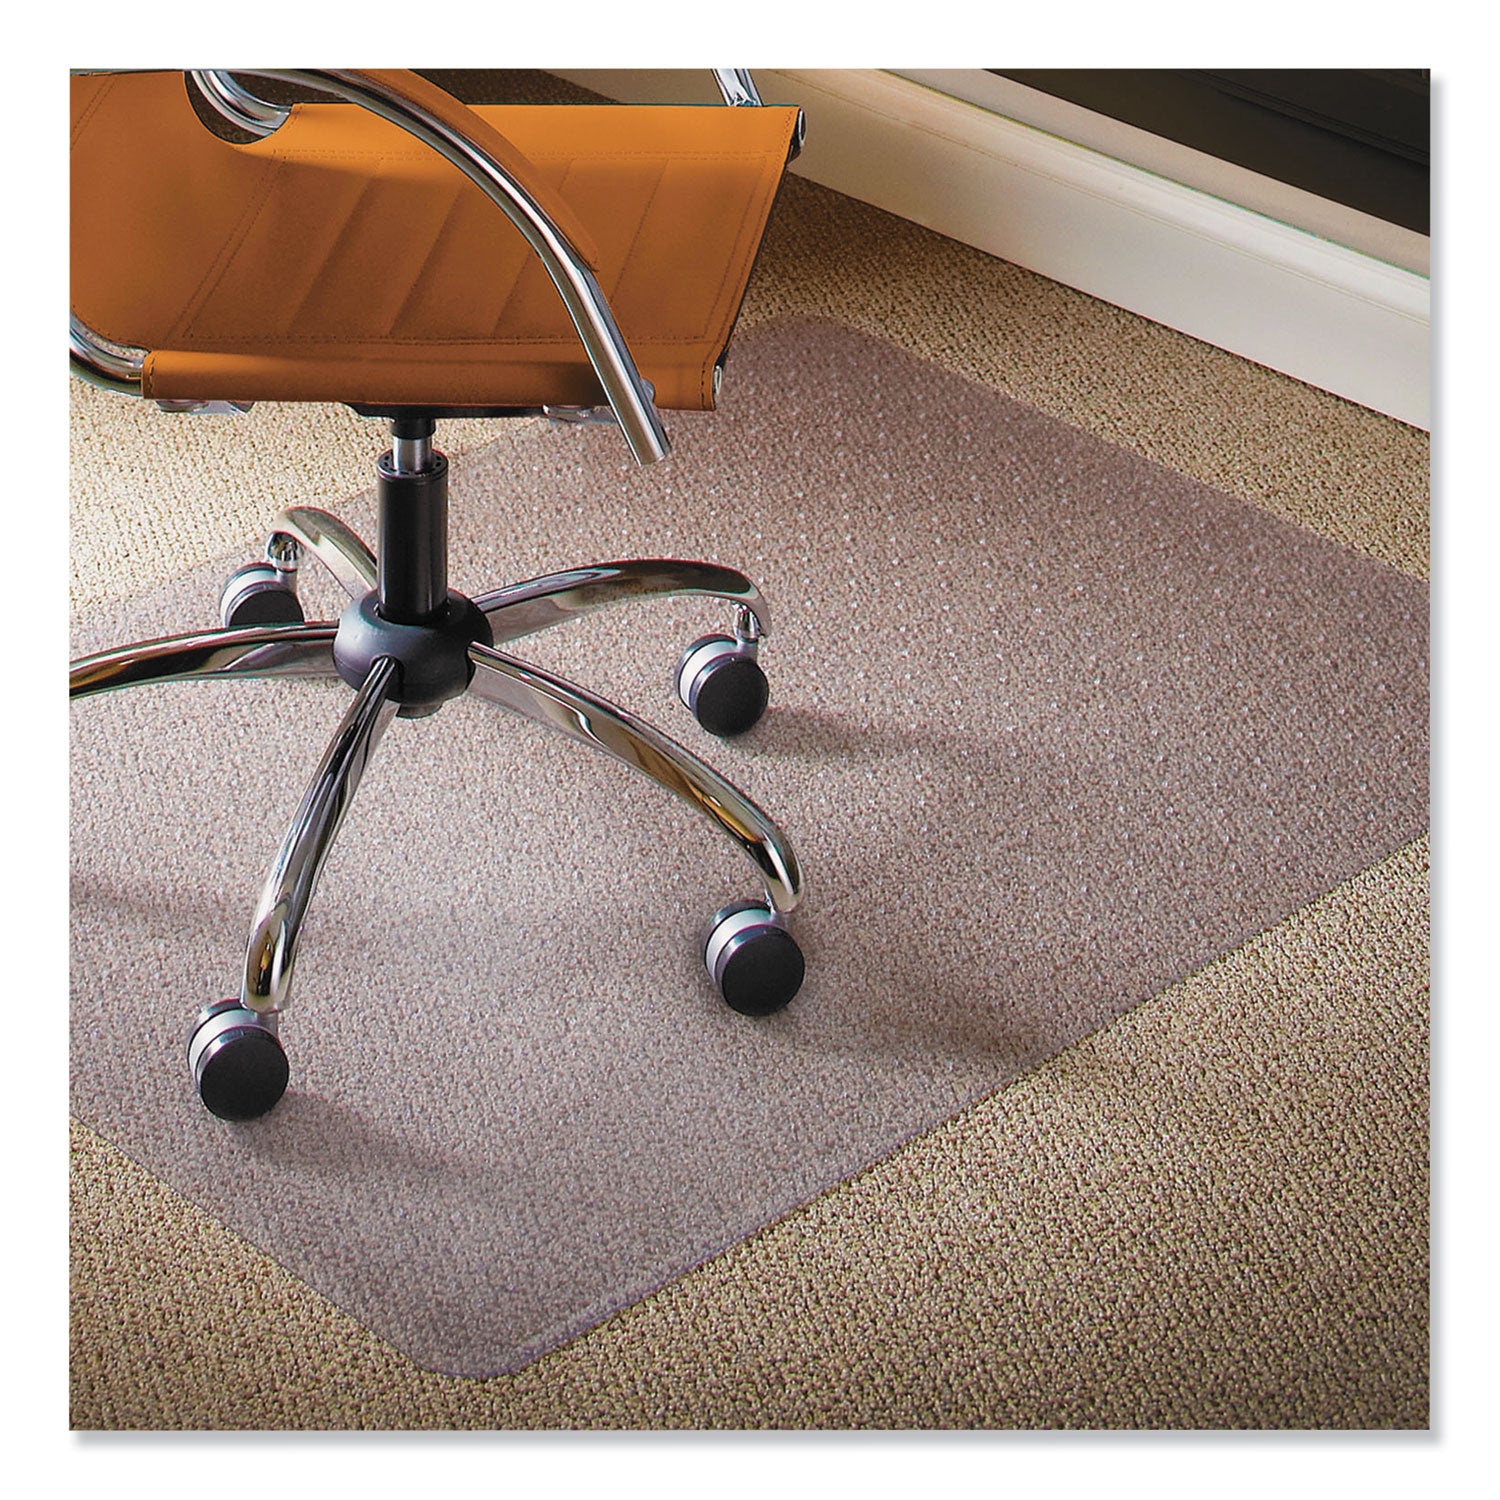 Natural Origins Chair Mat for Carpet, 46 x 60, Clear - 